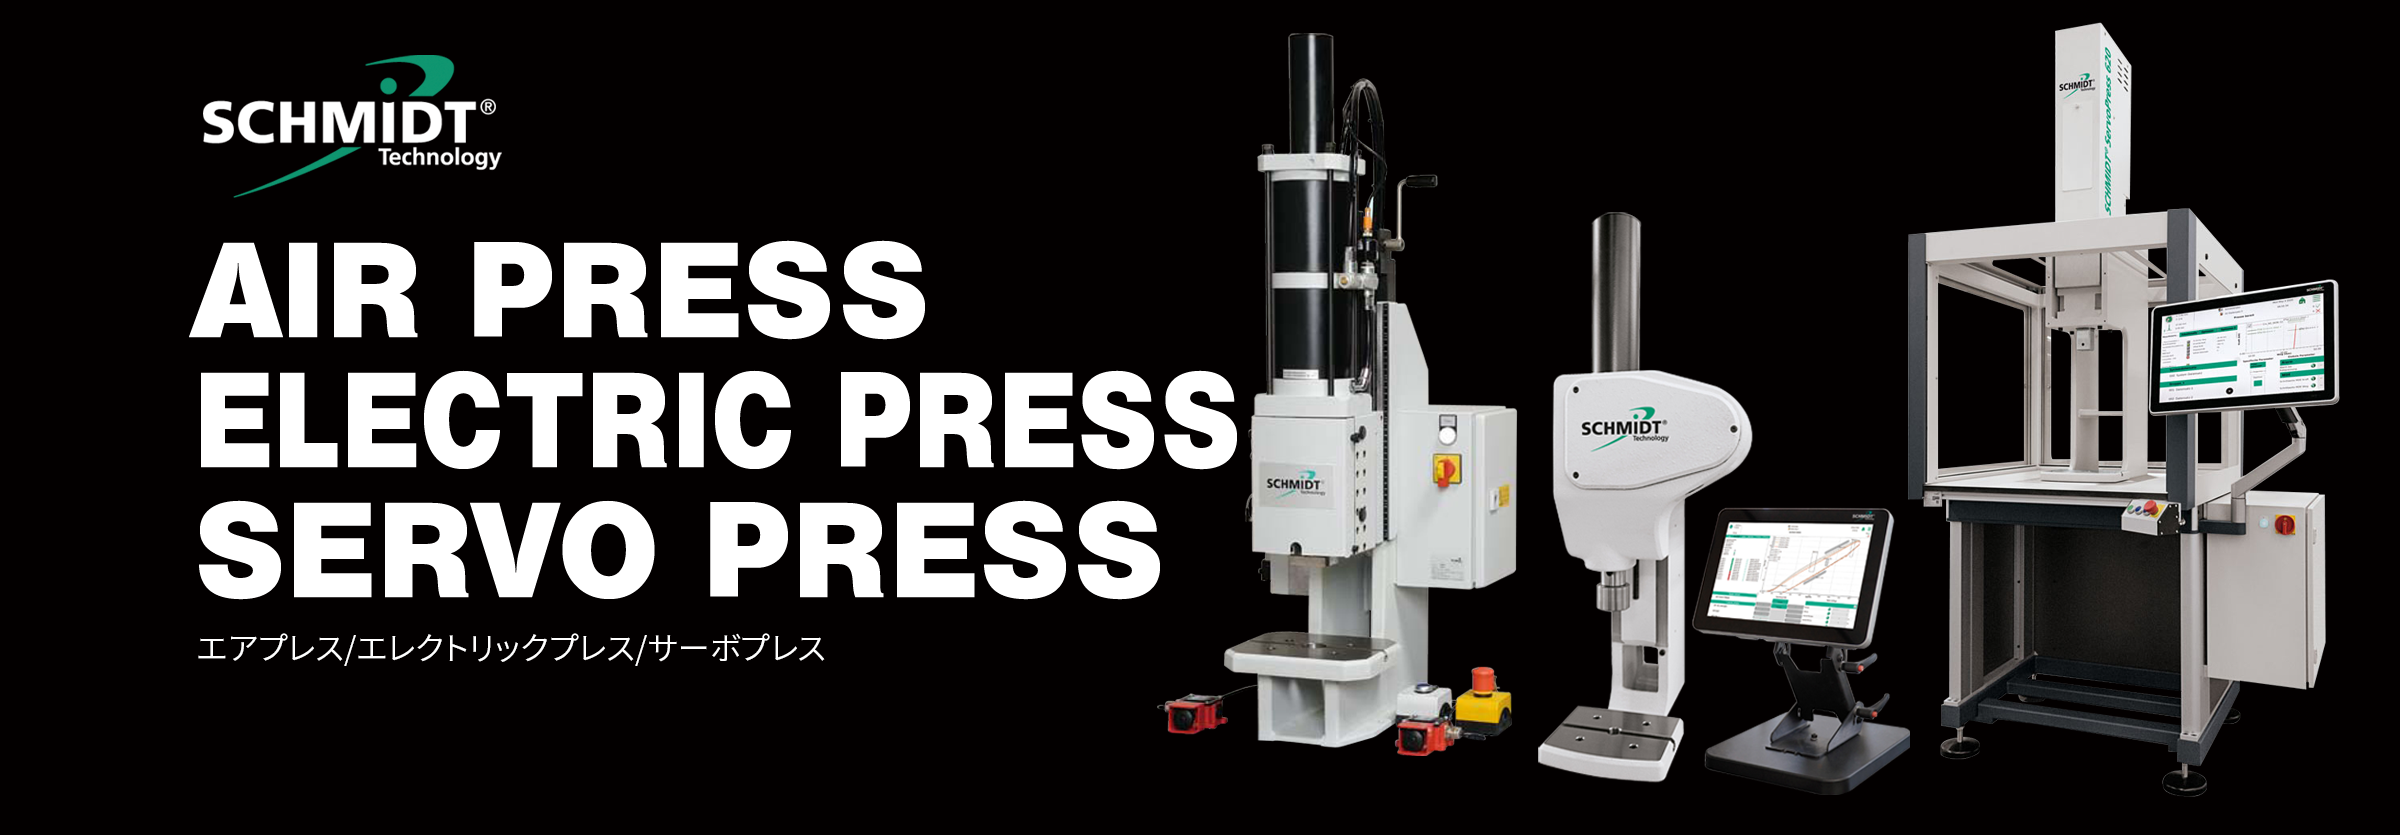 AIR PRESS ELECTRIC PRESS SERVO PRESS製品情報イメージ